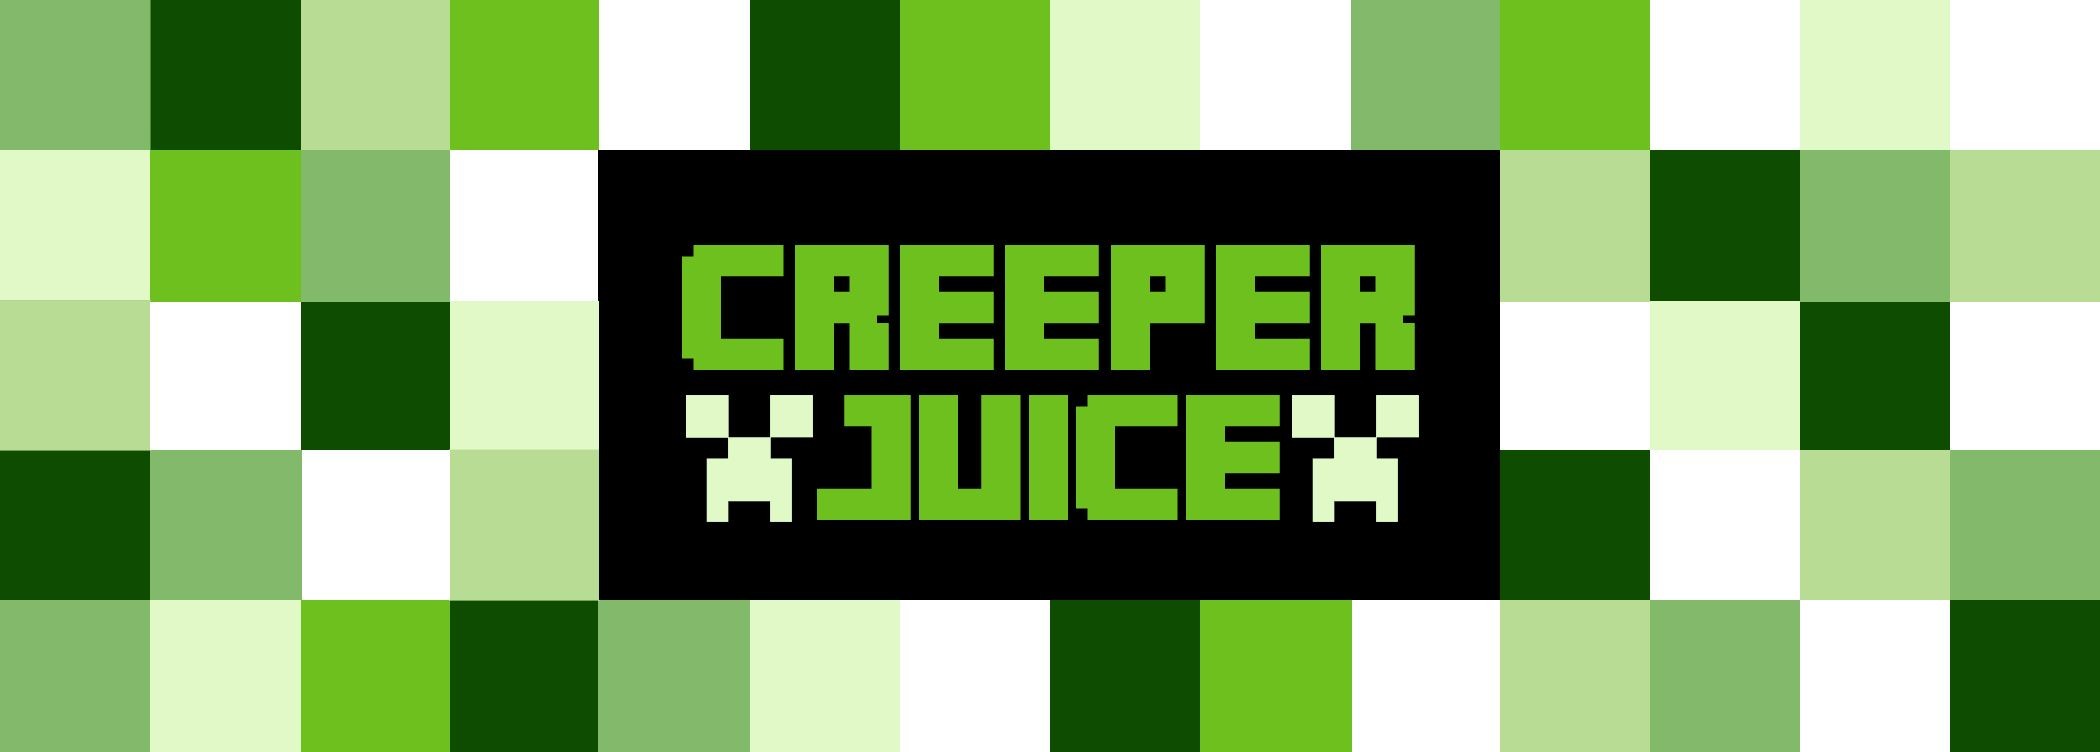 Creeper Papercraft Jpeg Of "creeper Juice" Printout